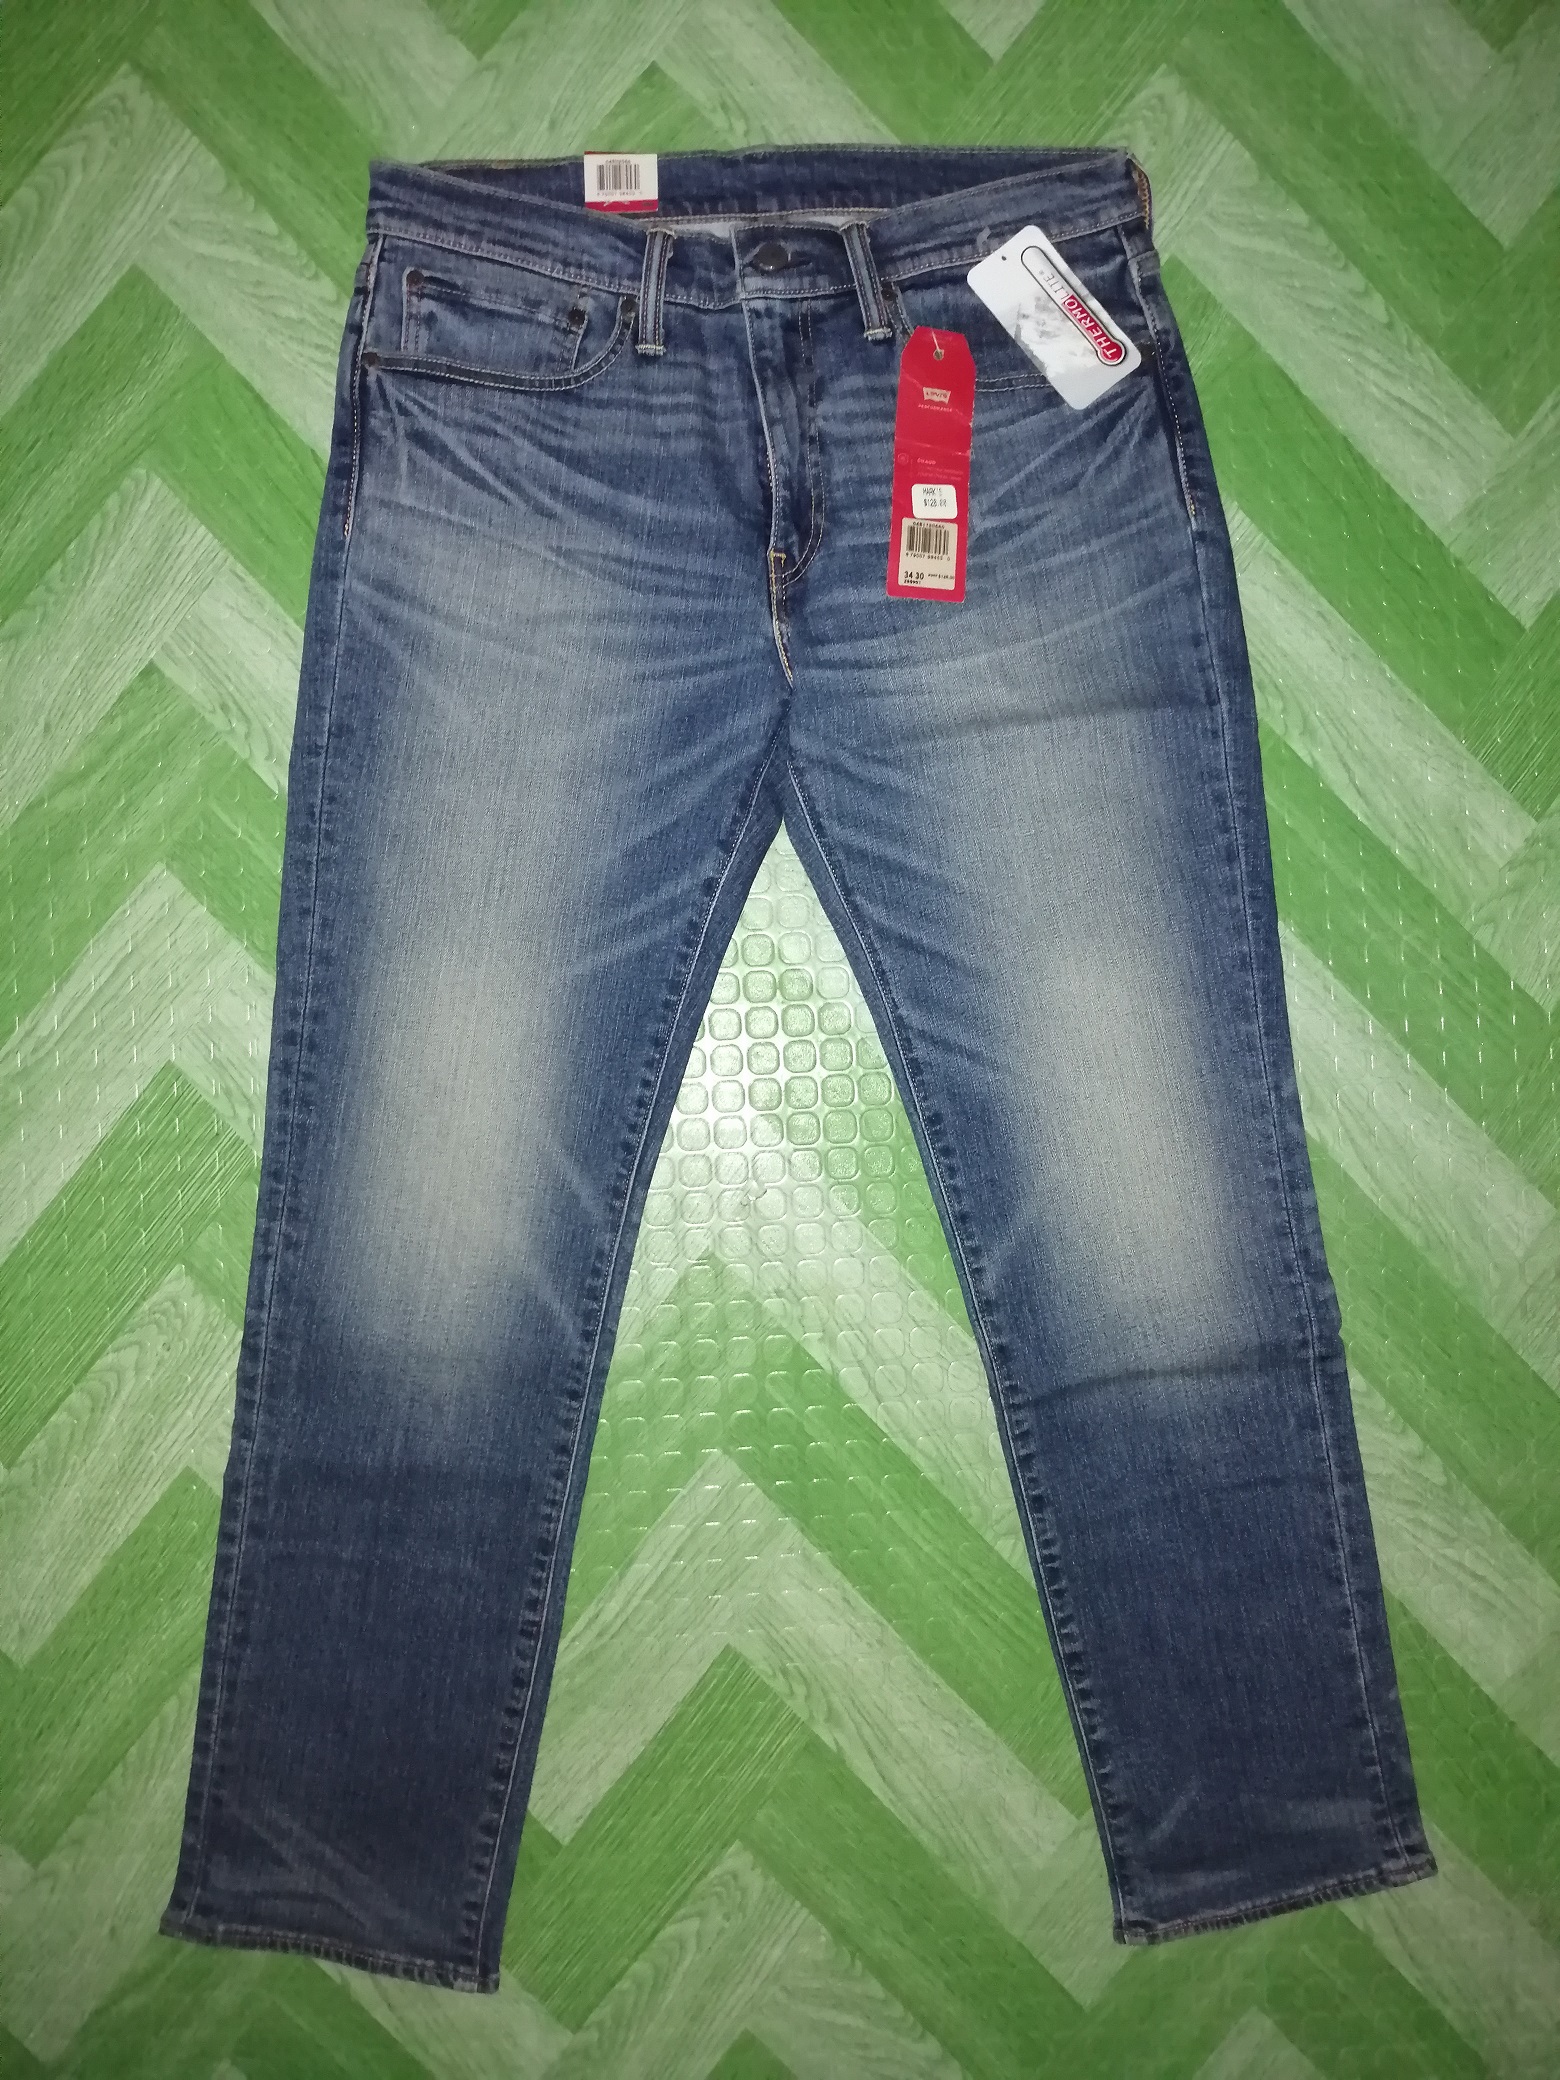 Authentic Levi's 511 Thermolite Slimfit Jeans size 34